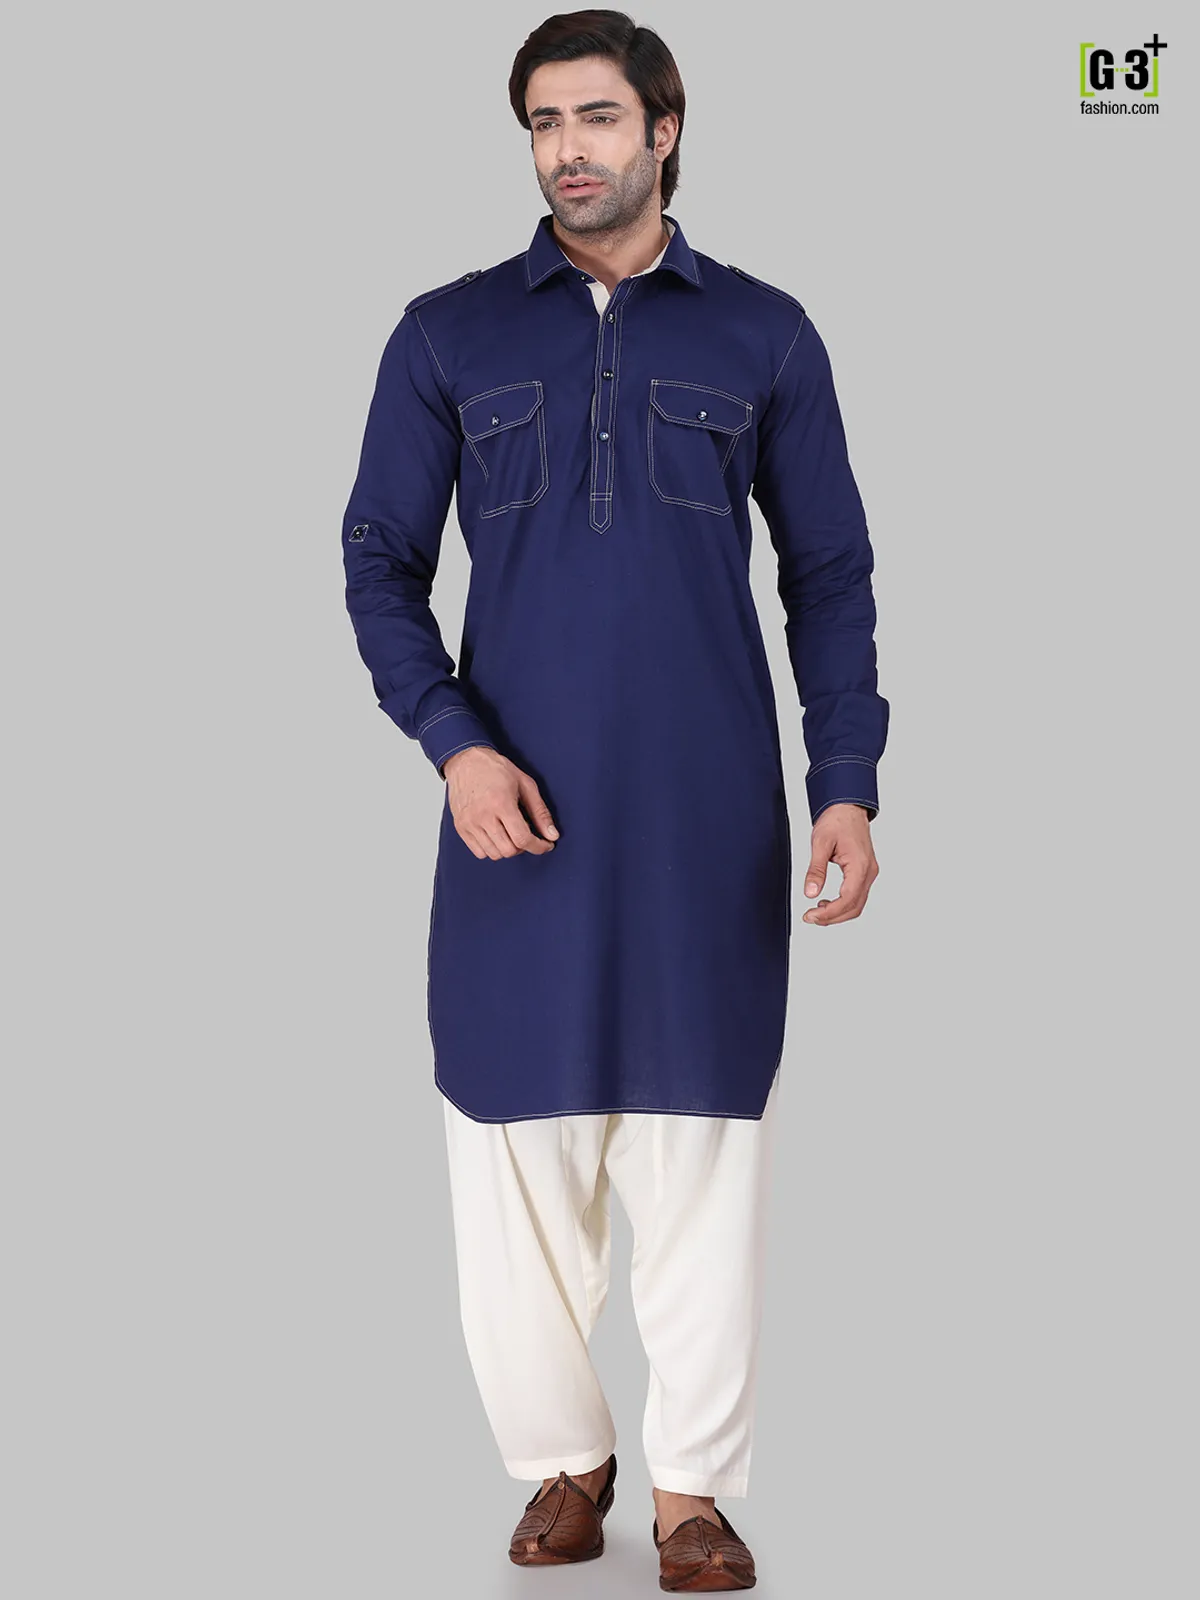 Royal blue cotton rayon pathani suit